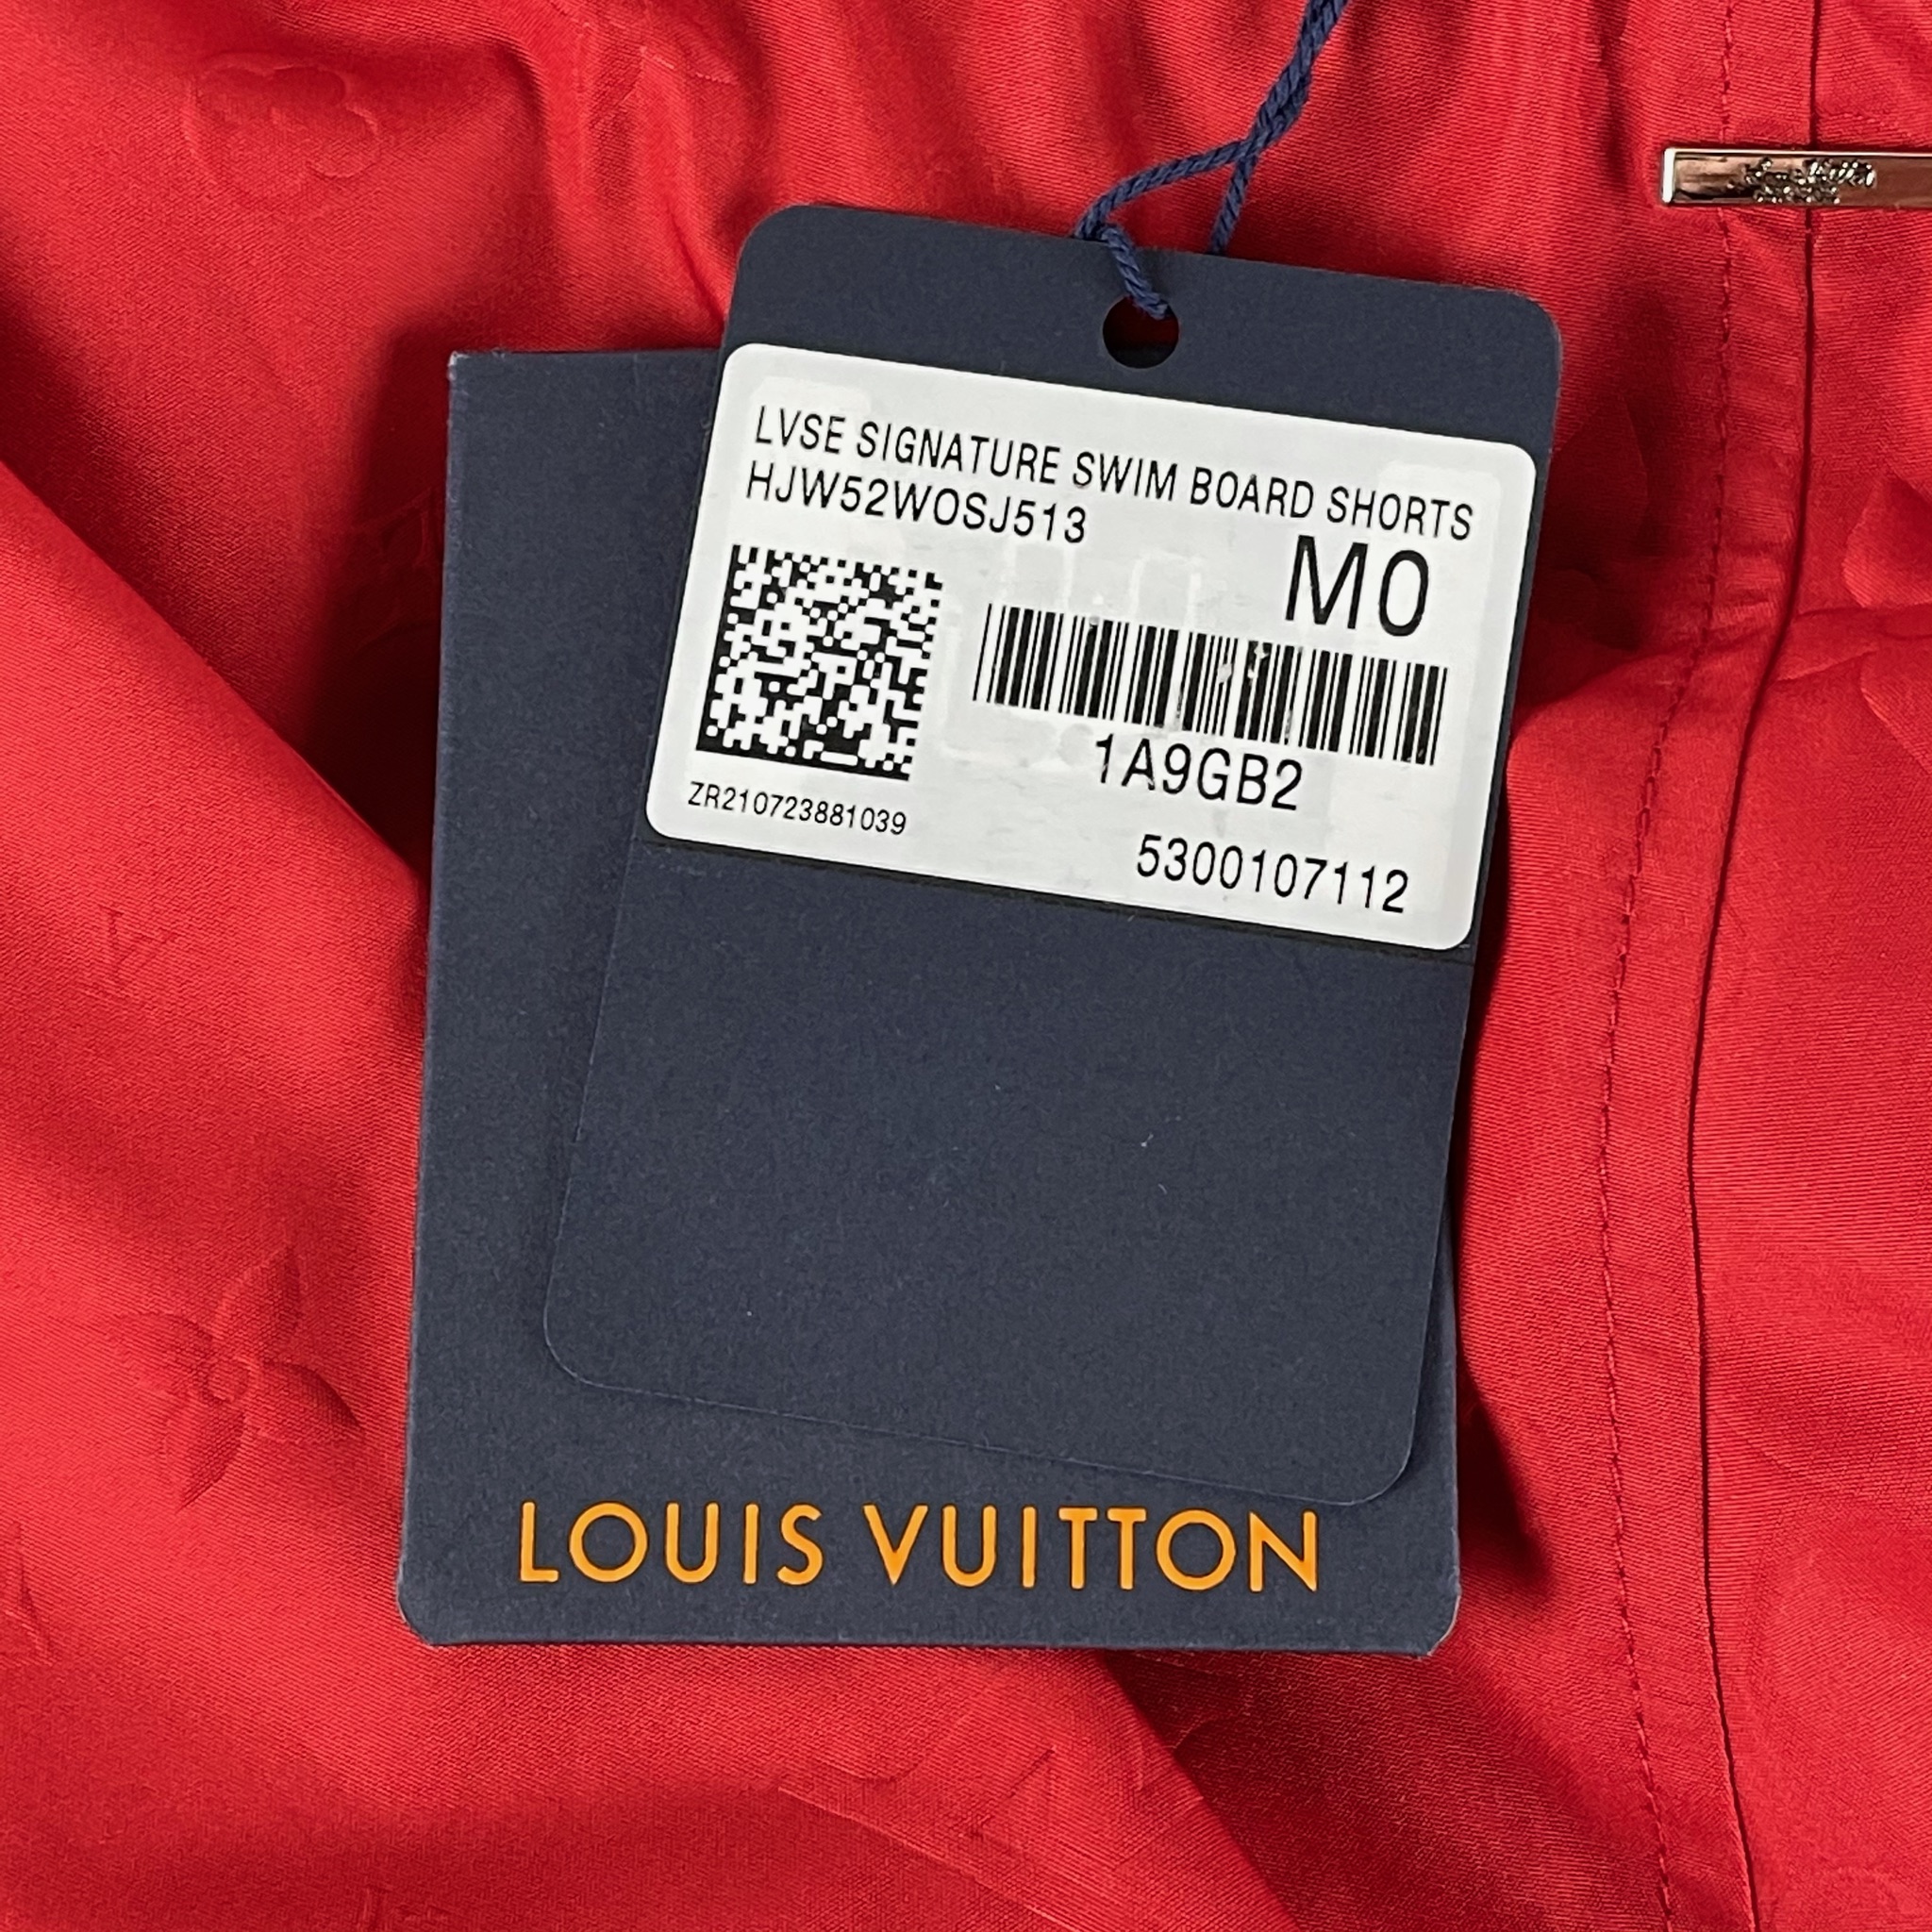 Louis Vuitton Lvse Signature Swim Board Shorts